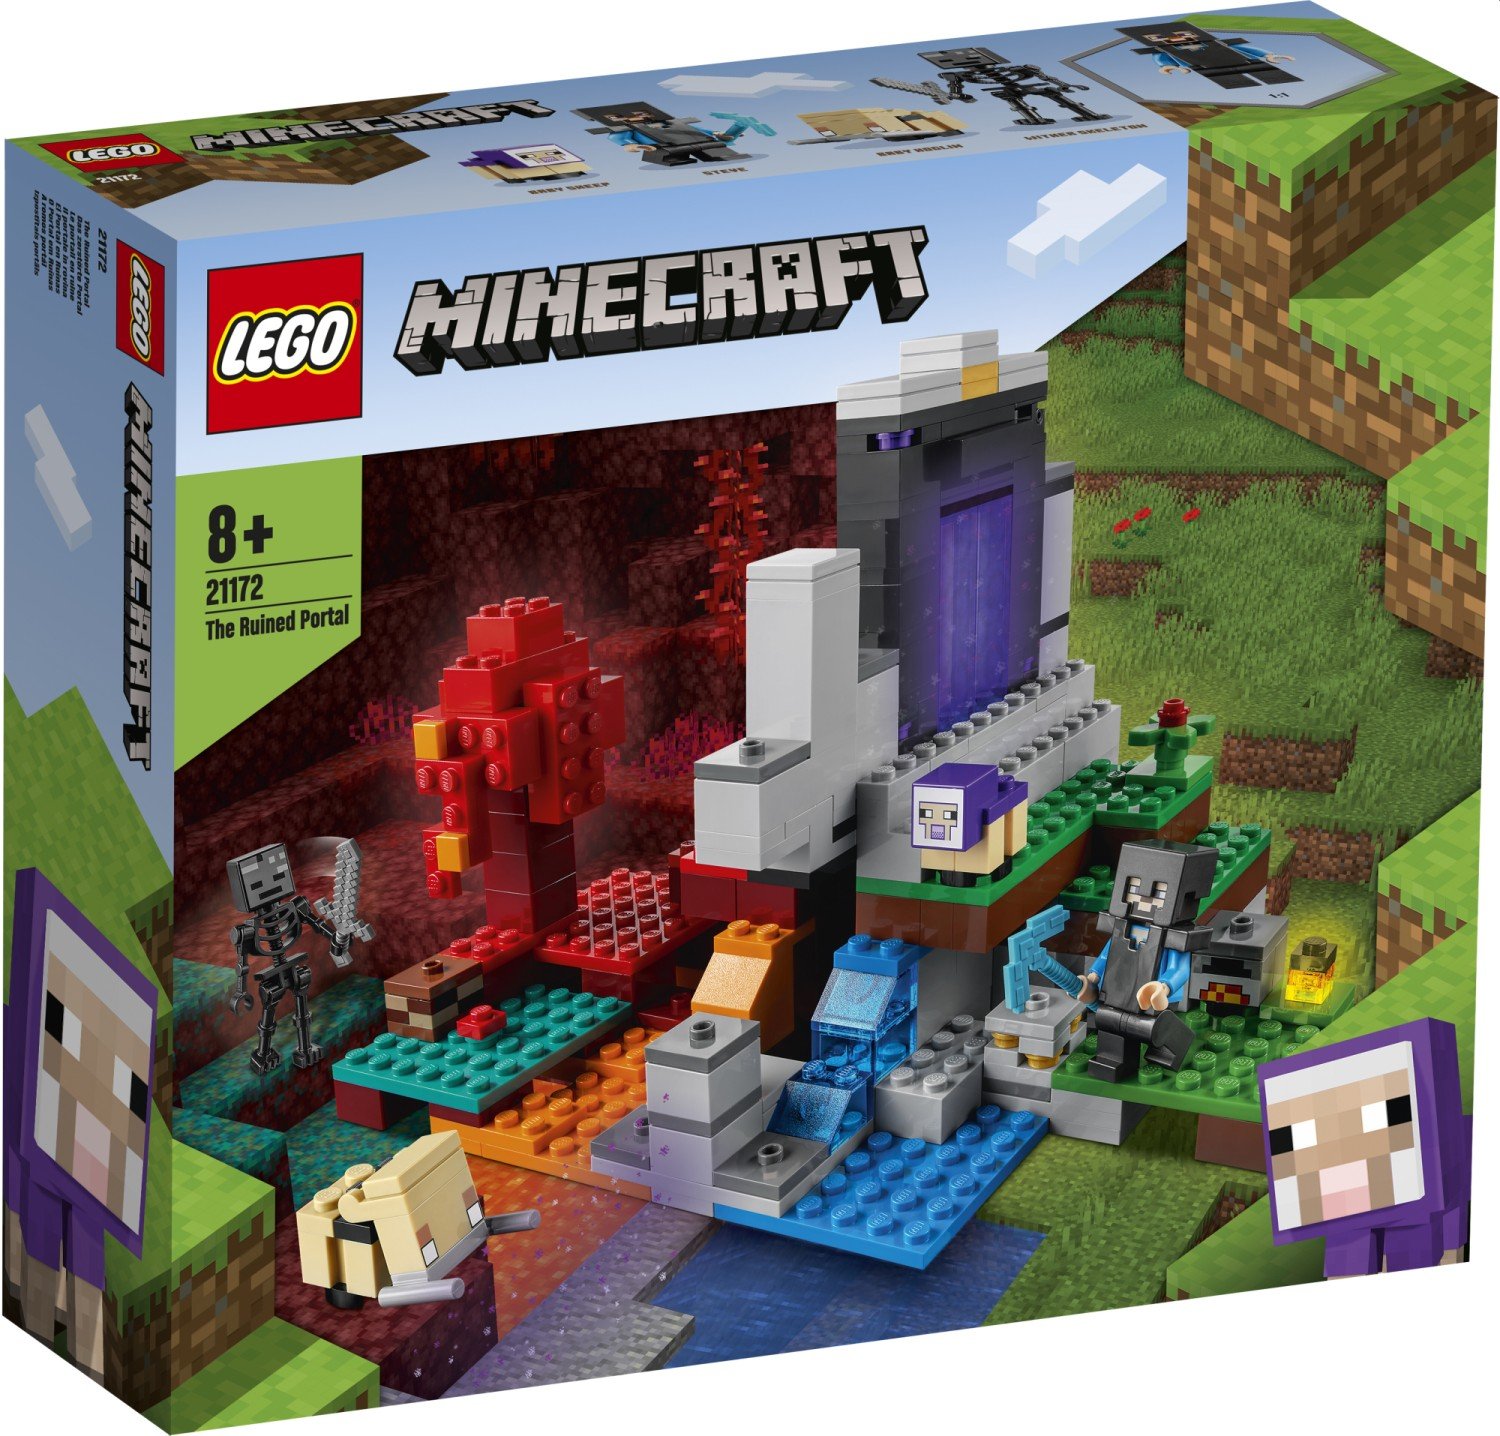 OFFICIAL PHOTOS!! LEGO Minecraft Sets  Summer 2021  Lets Build Lego